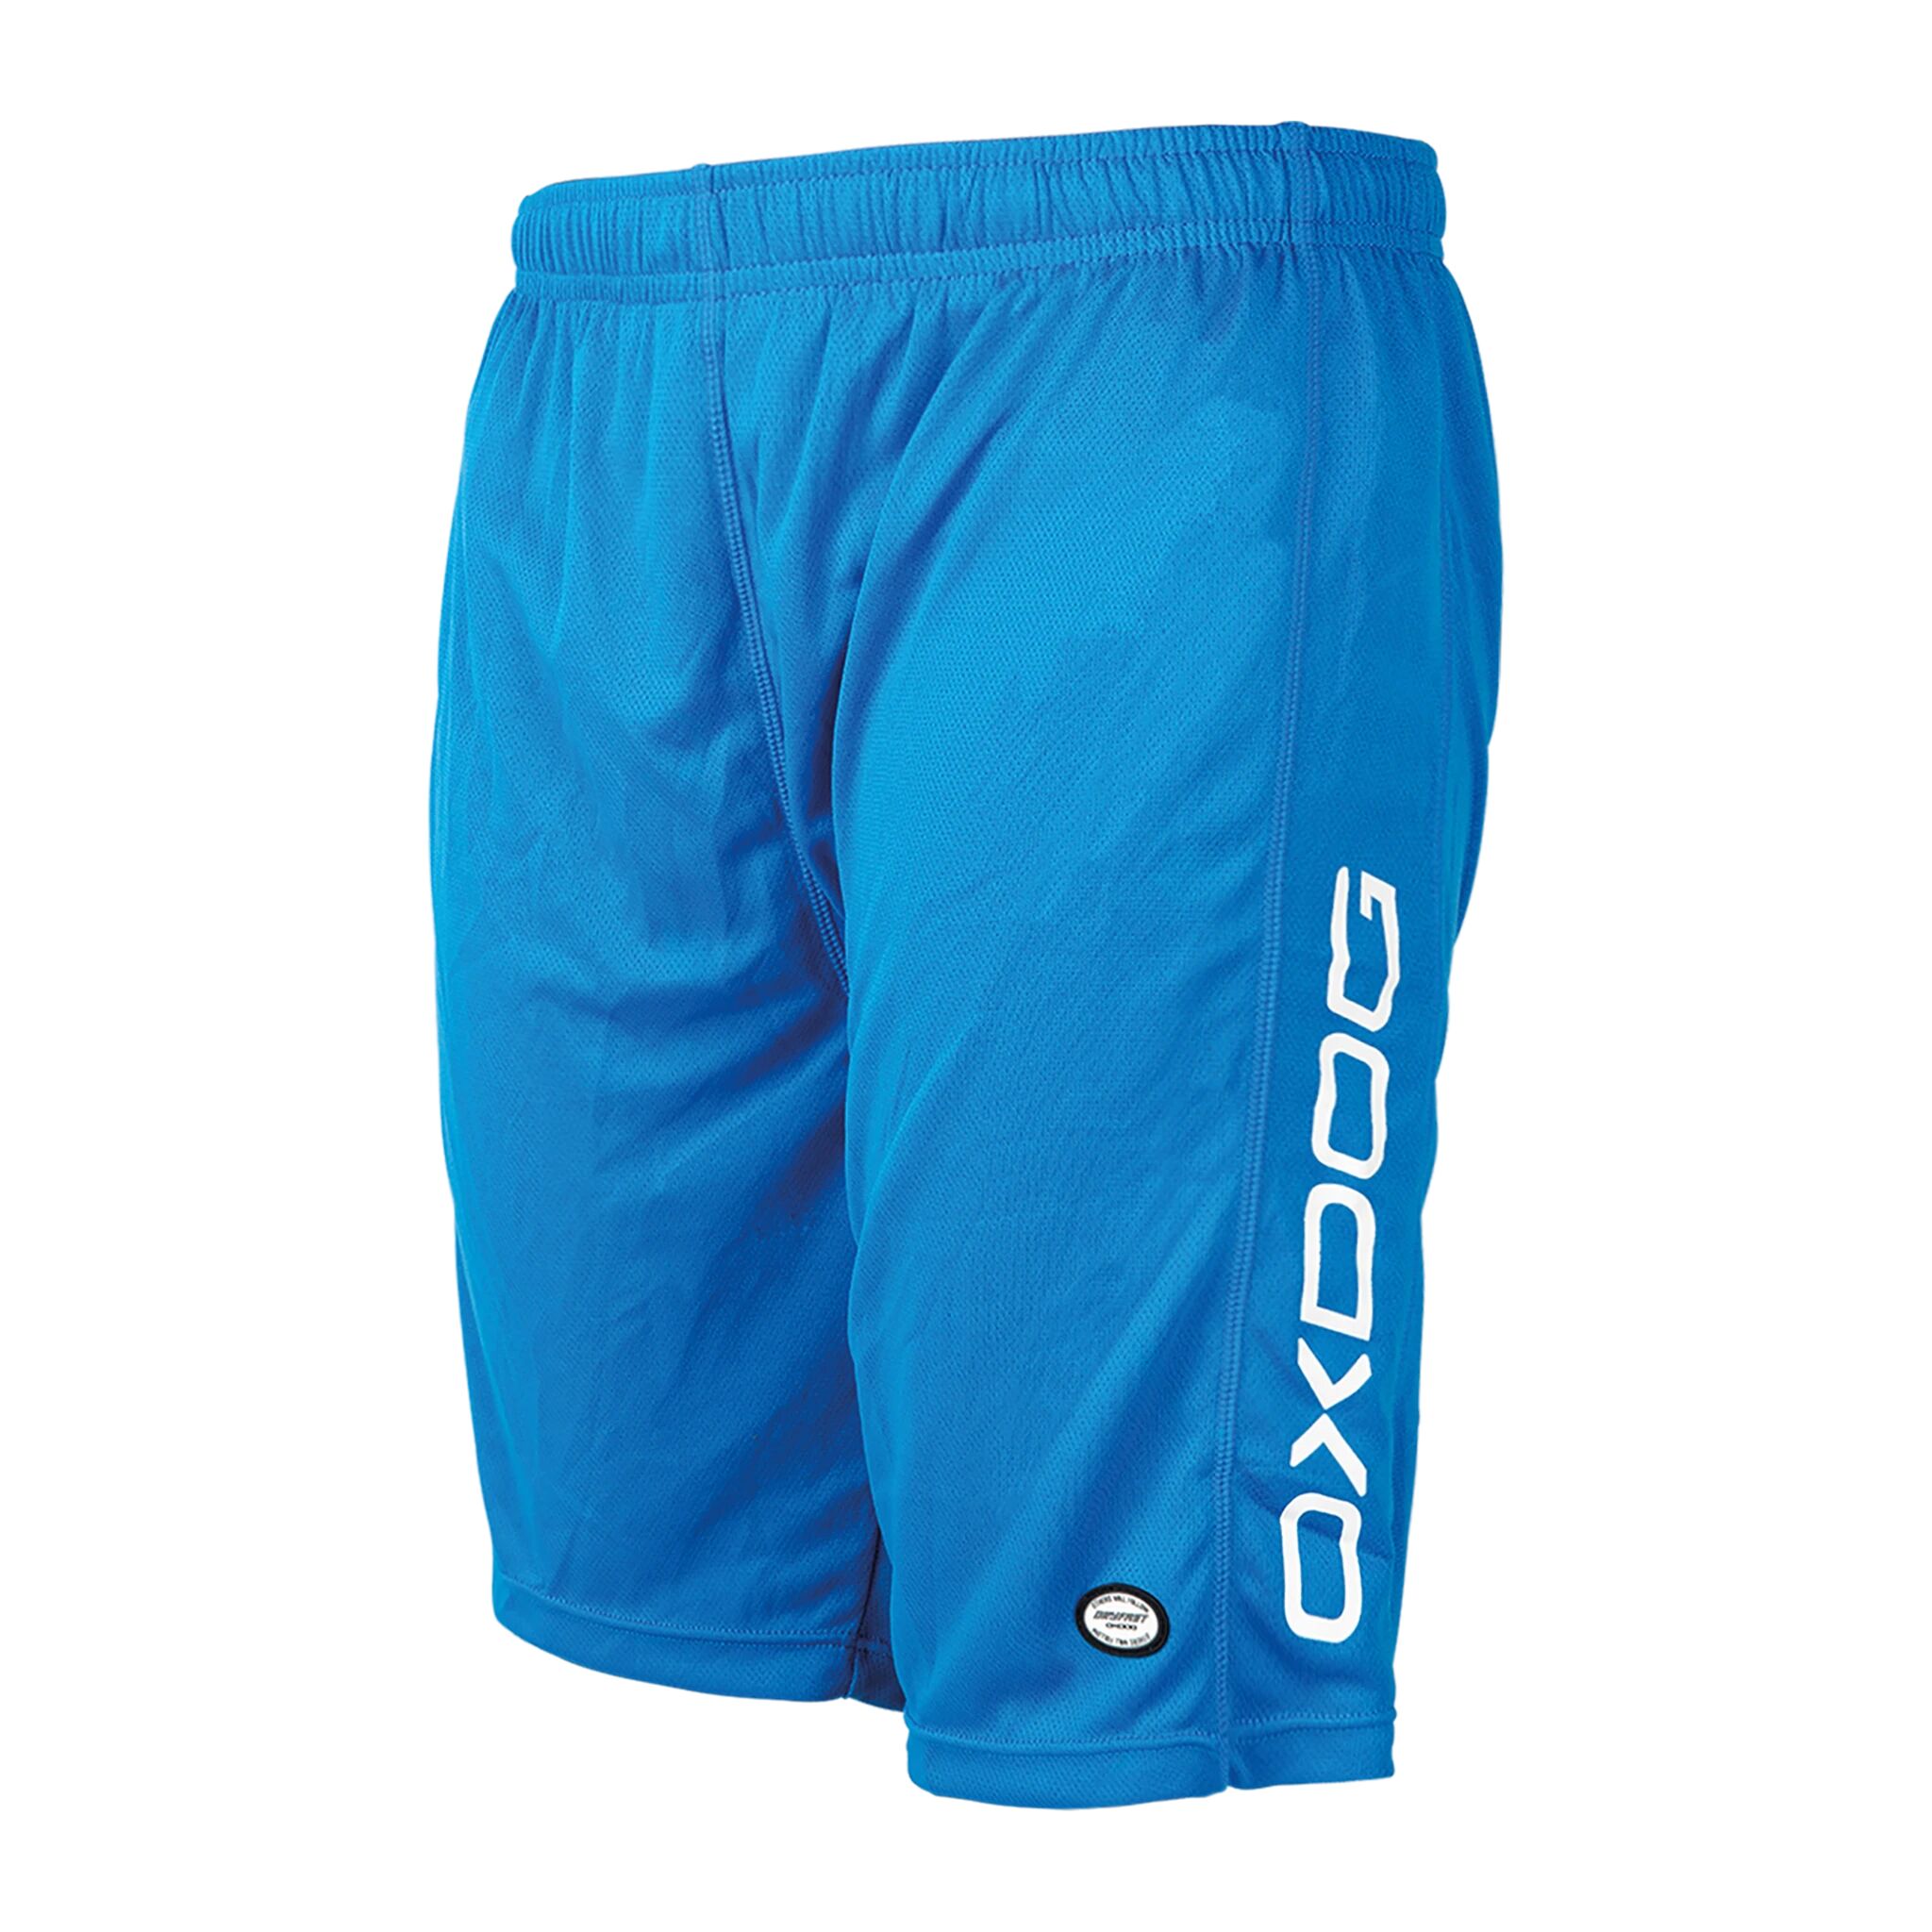 Oxdog 2021 AVALON SHORTS Sr, shorts senior 128 ROYAL BLUE